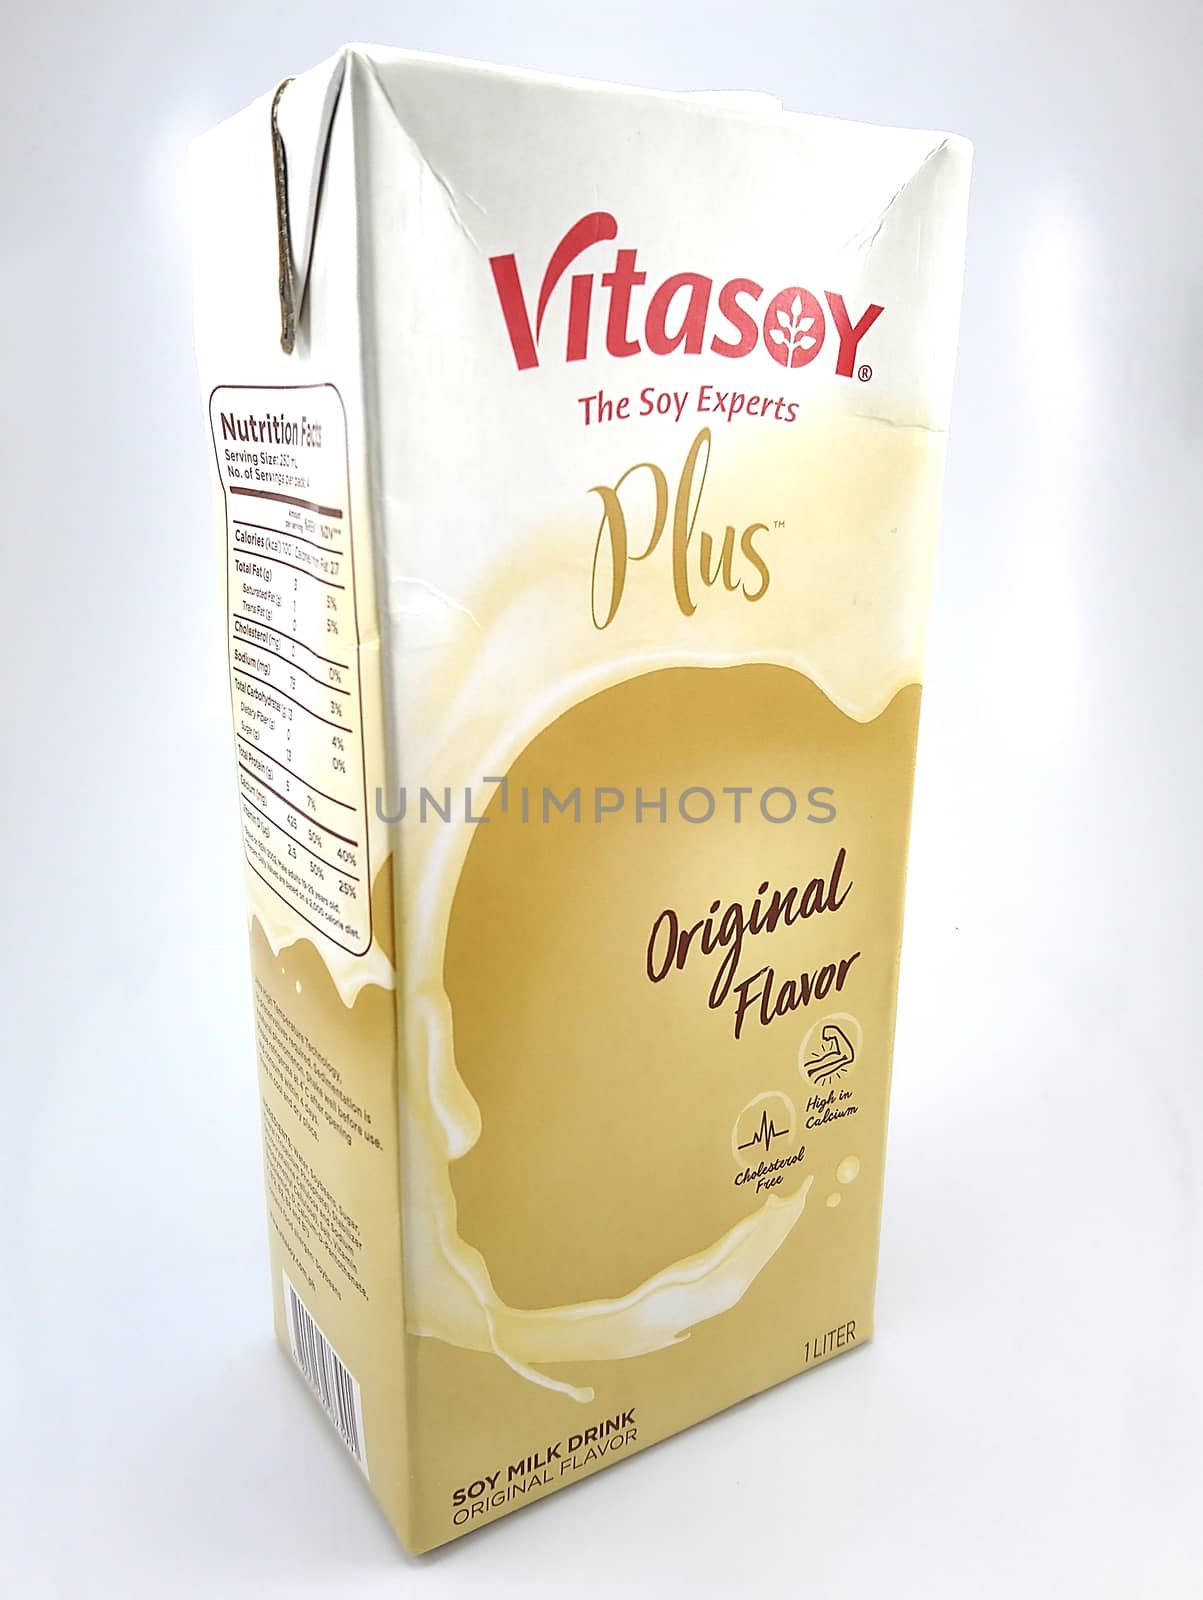 Vitasoy plus original soy milk drink in Manila, Philippines by imwaltersy